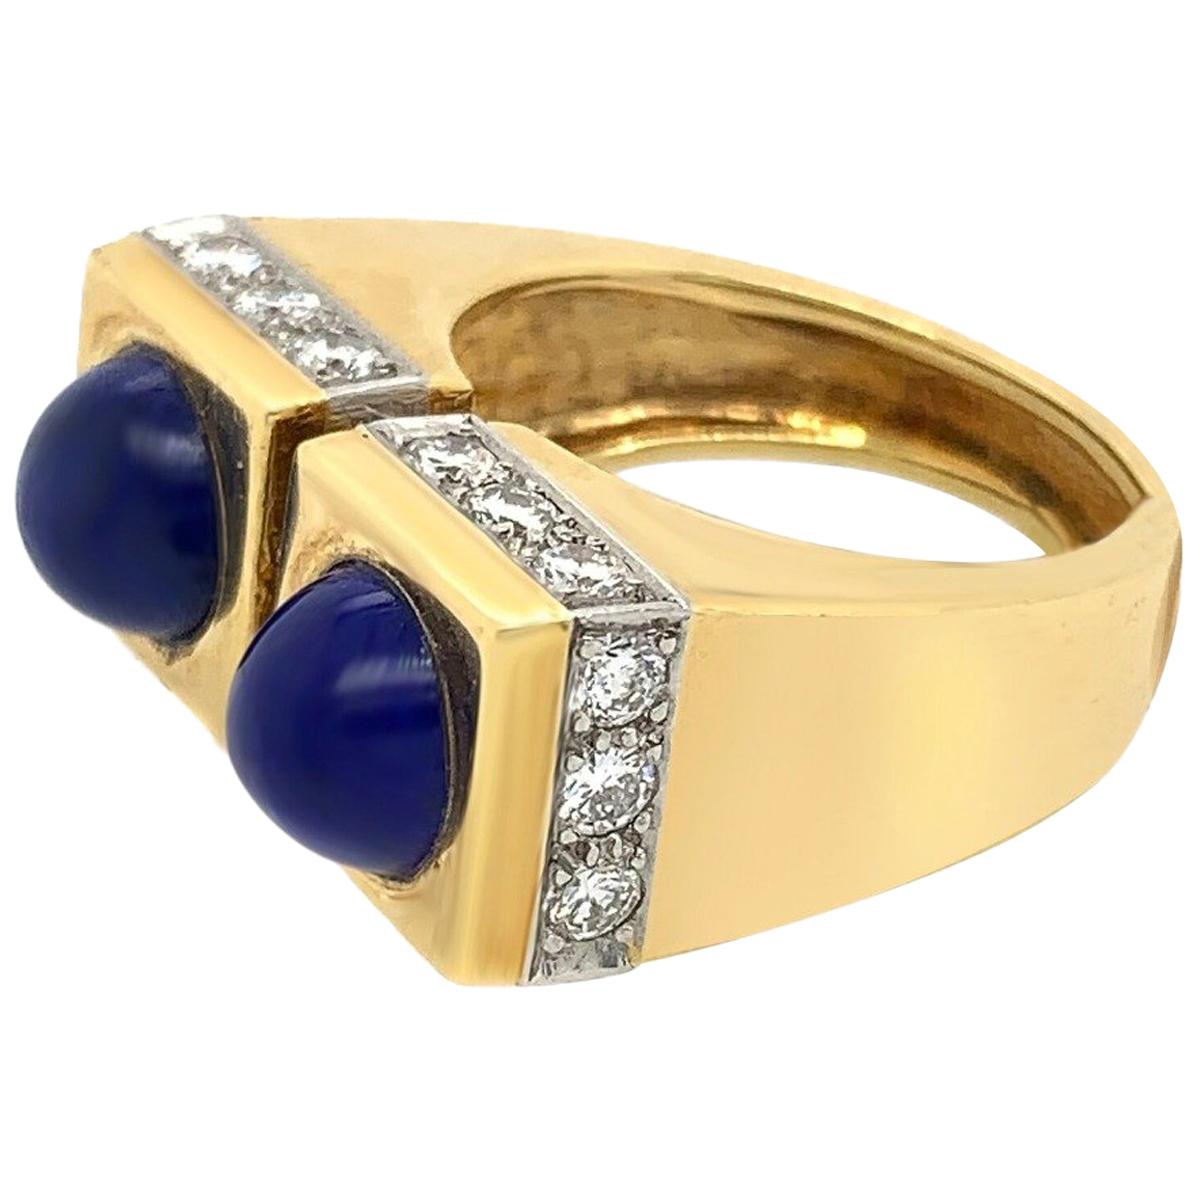 Tiffany & Co Yellow Gold Diamond Lapis Ring Set with 2 Lapis Lazuli Stones For Sale